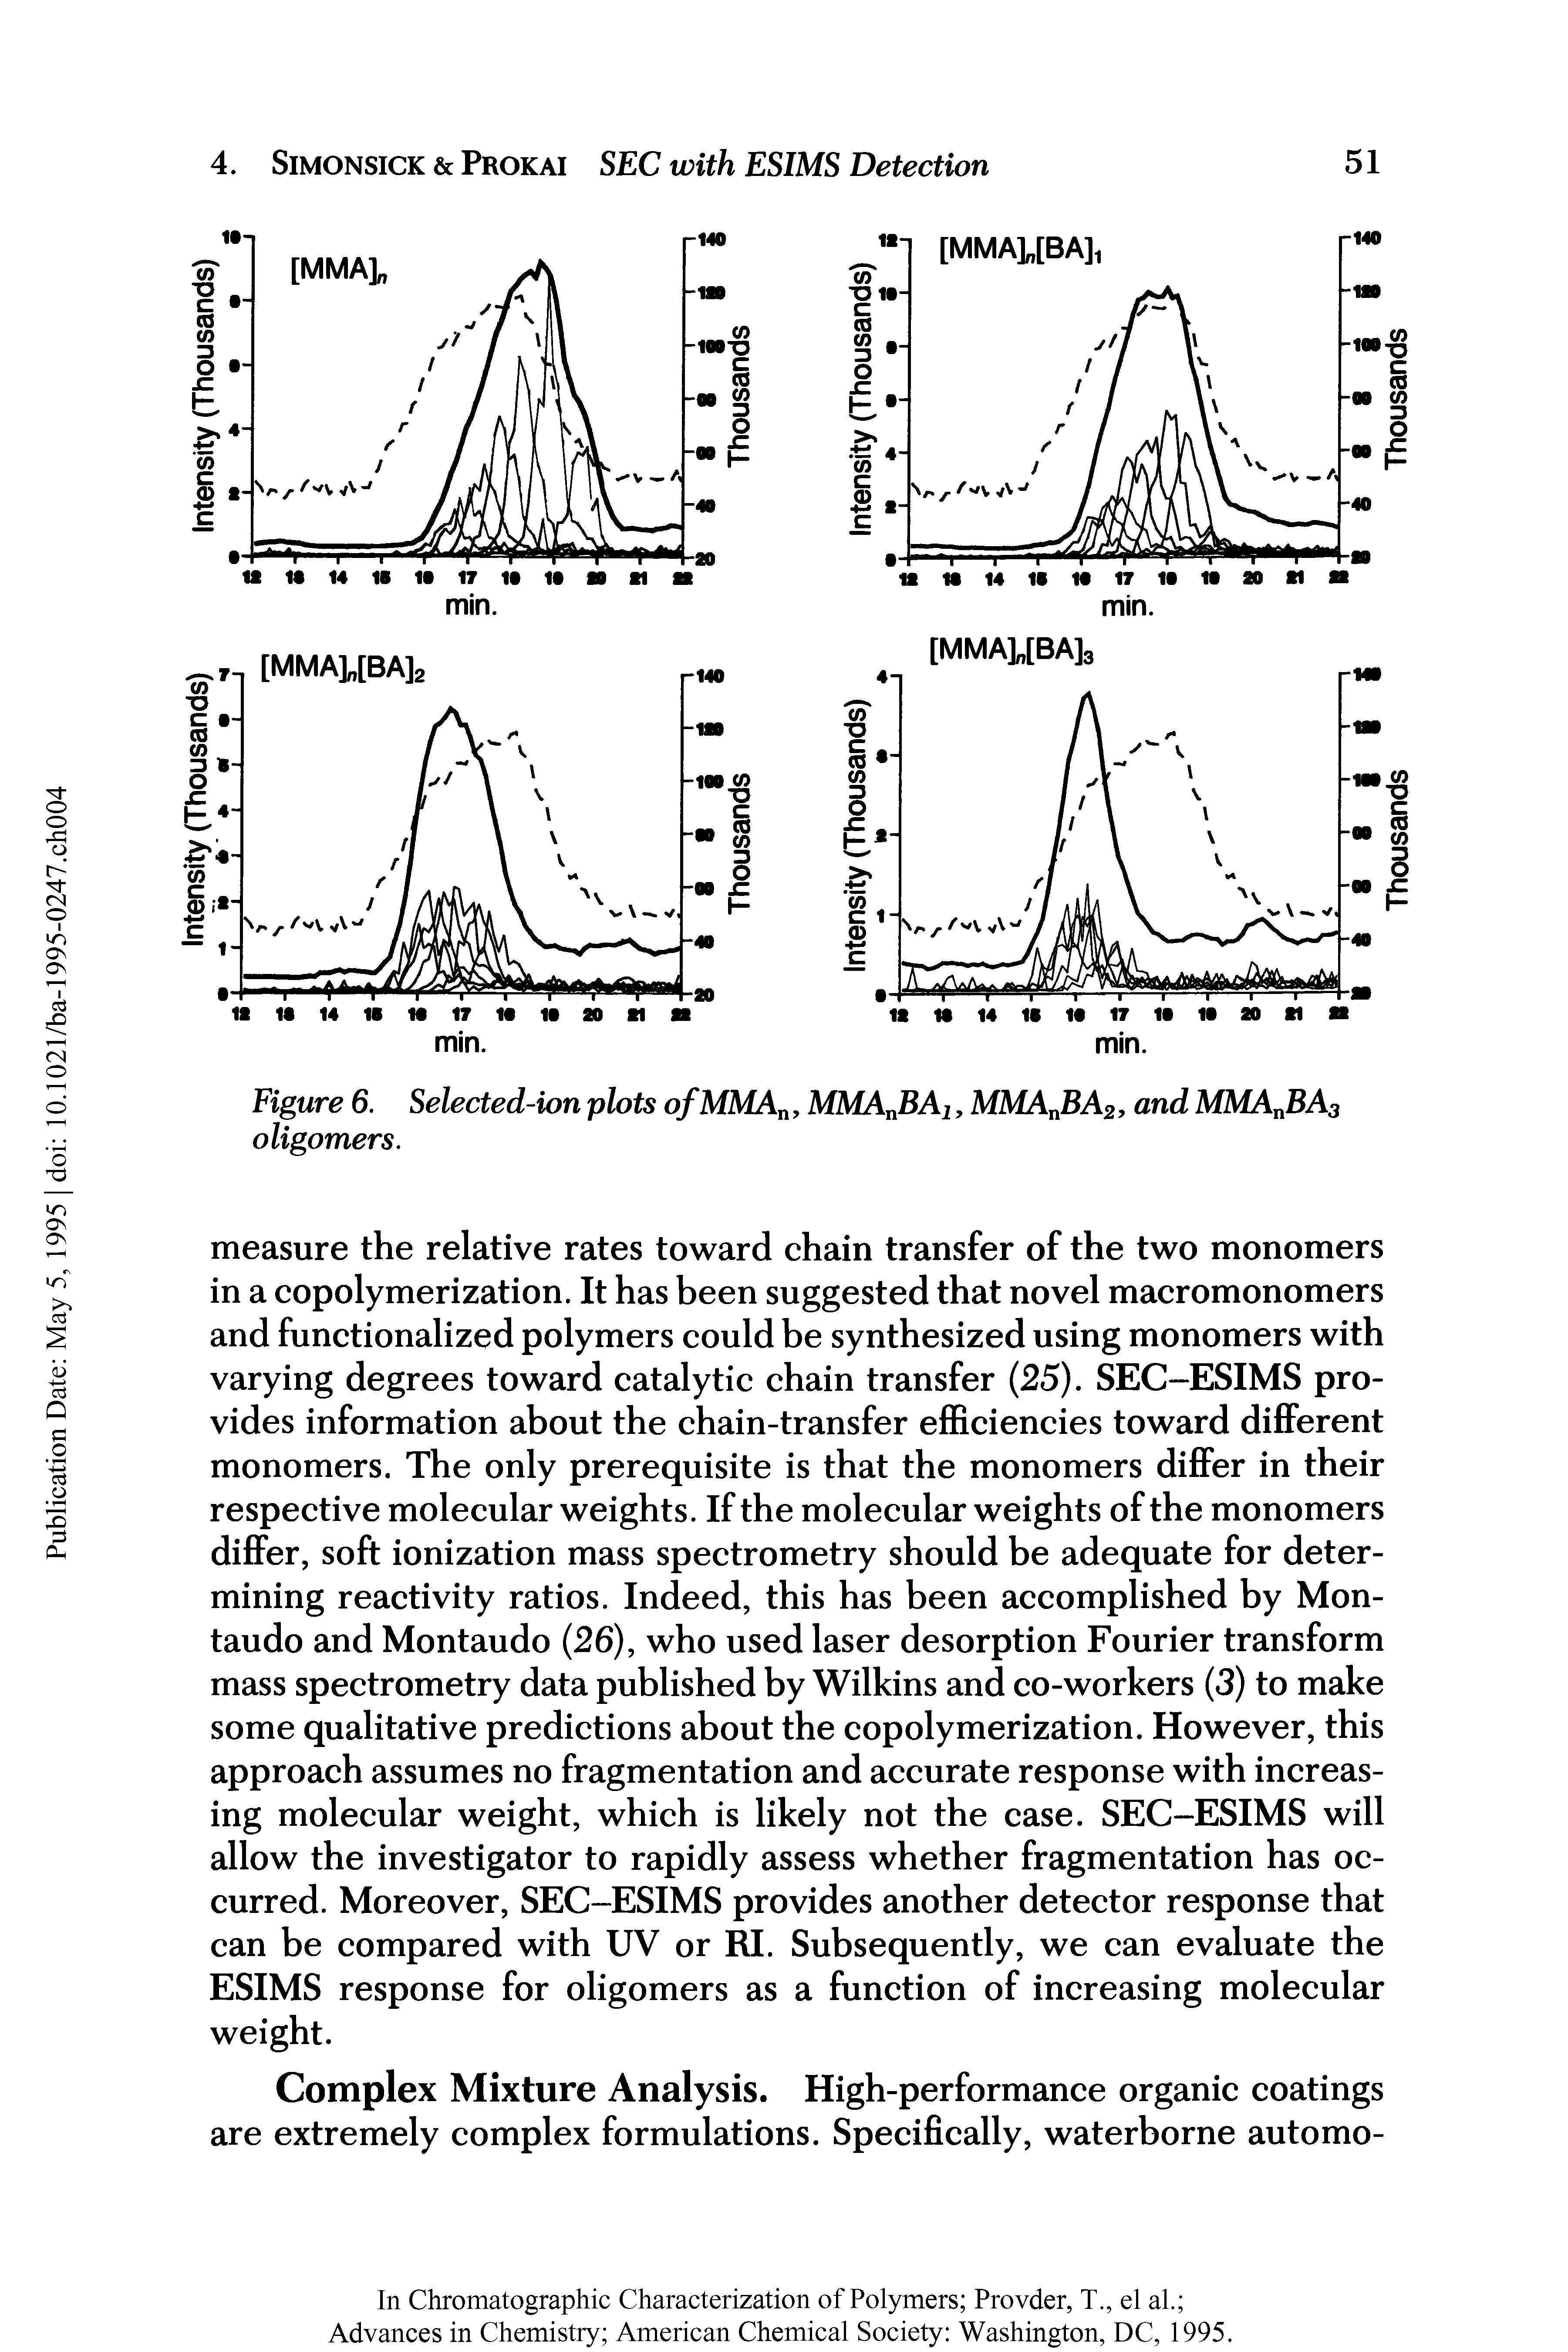 Figure 6. Selected-ion plots o/MMAn, MMA BAi, MMAnBA2, and MMA BAs oligomers.